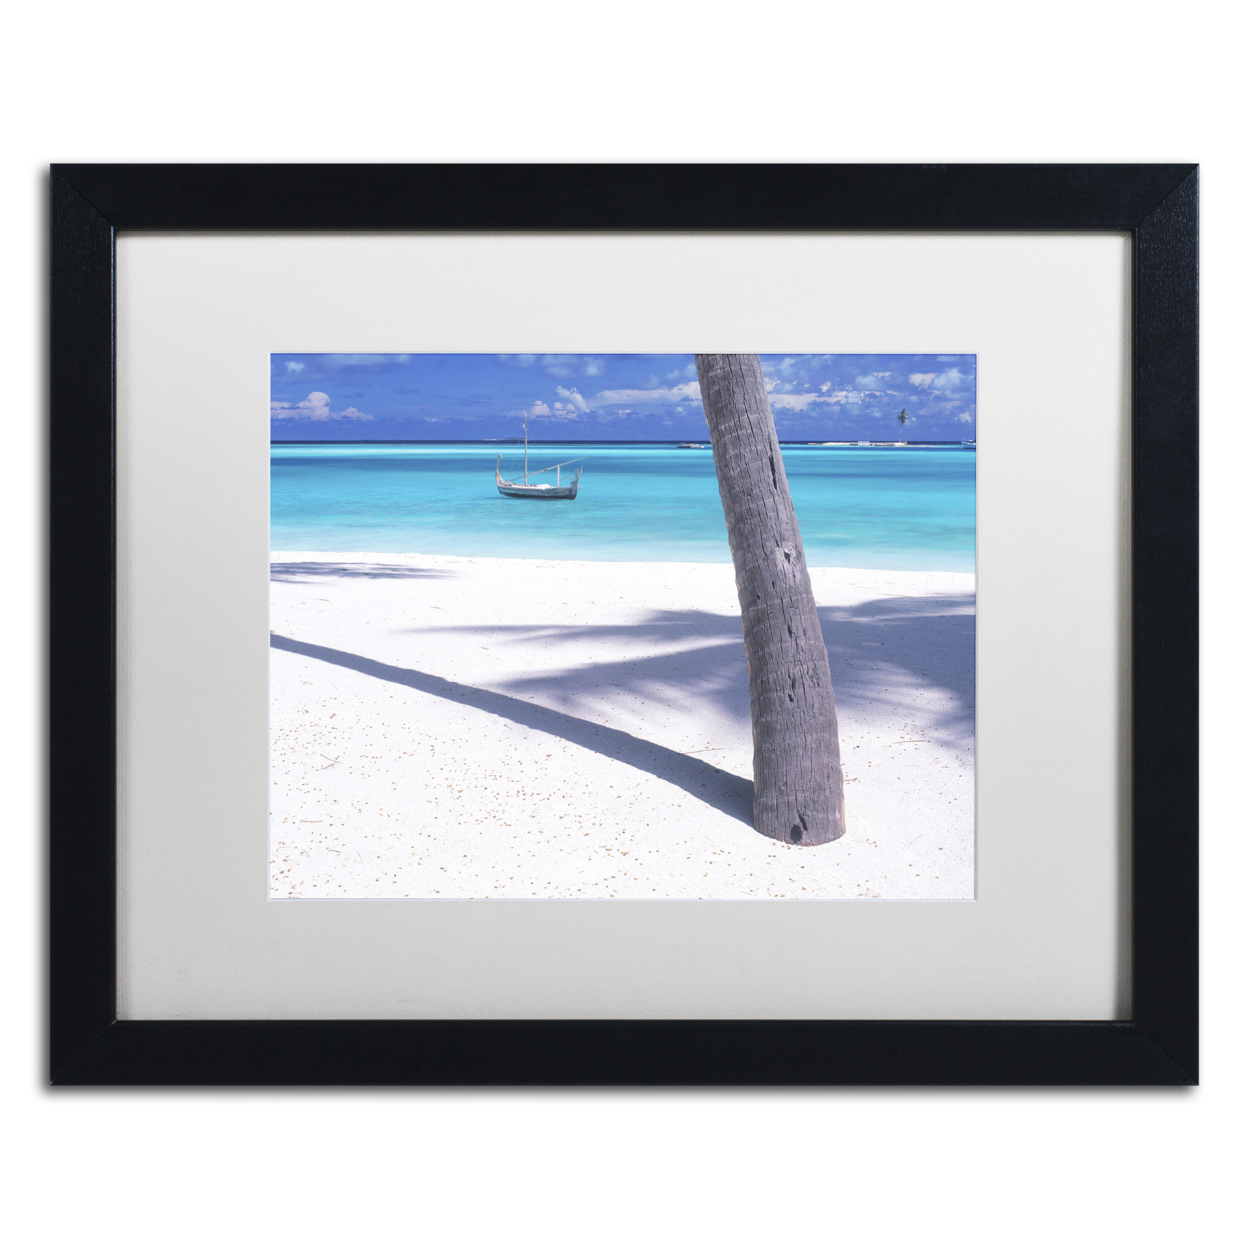 David Evans 'Palm Shadow-Maldives' Black Wooden Framed Art 18 X 22 Inches